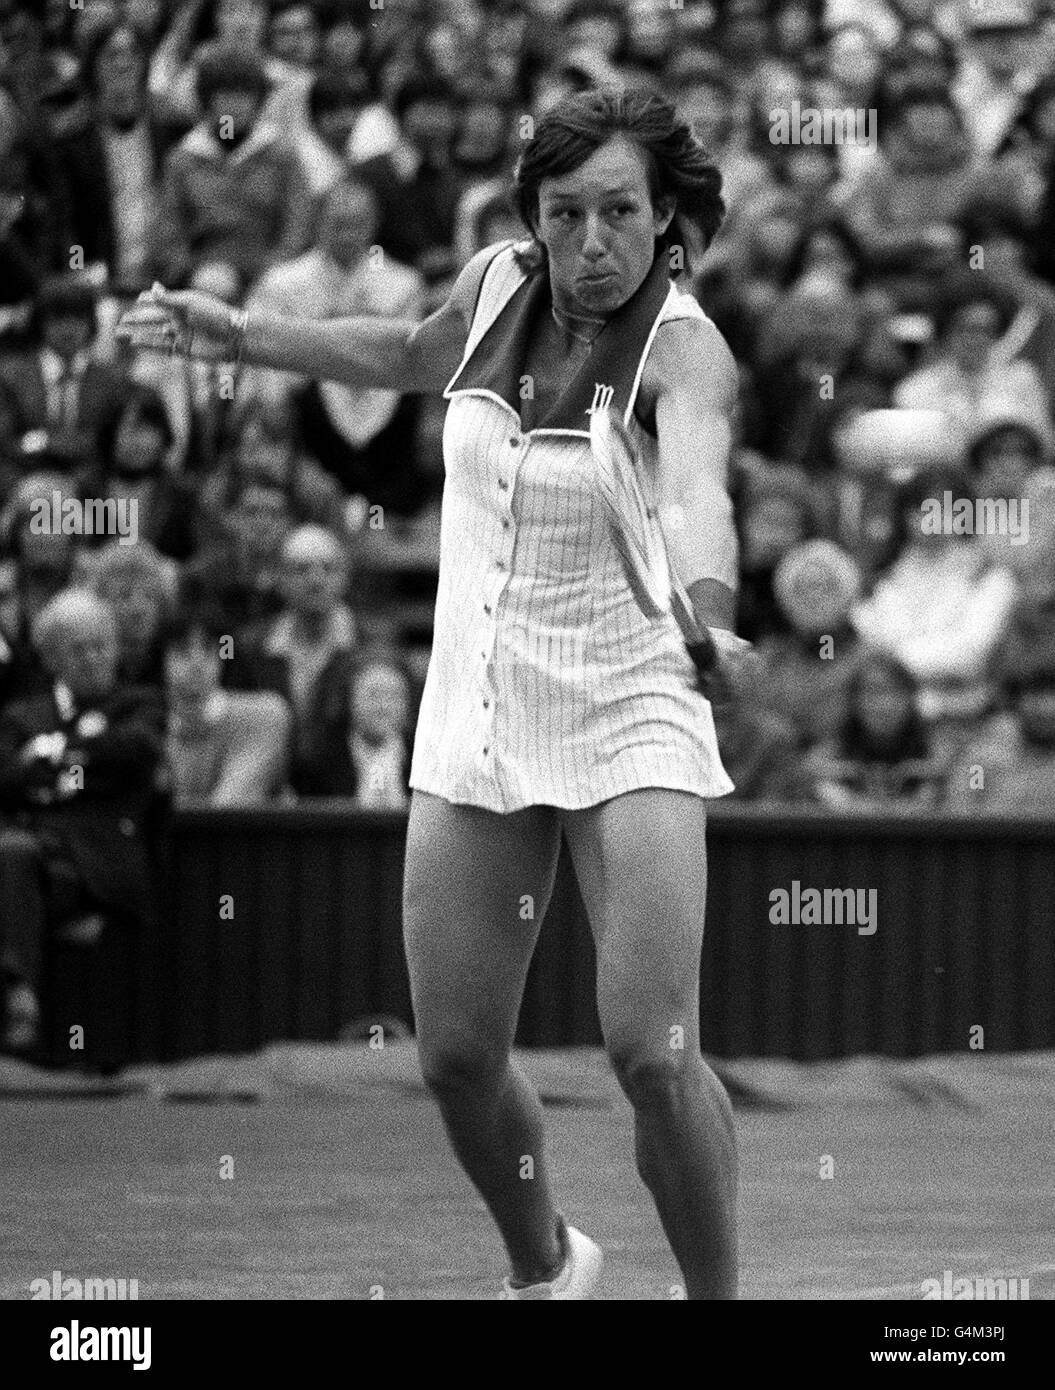 Wimbledon/Navratilova In Action Stock Photo